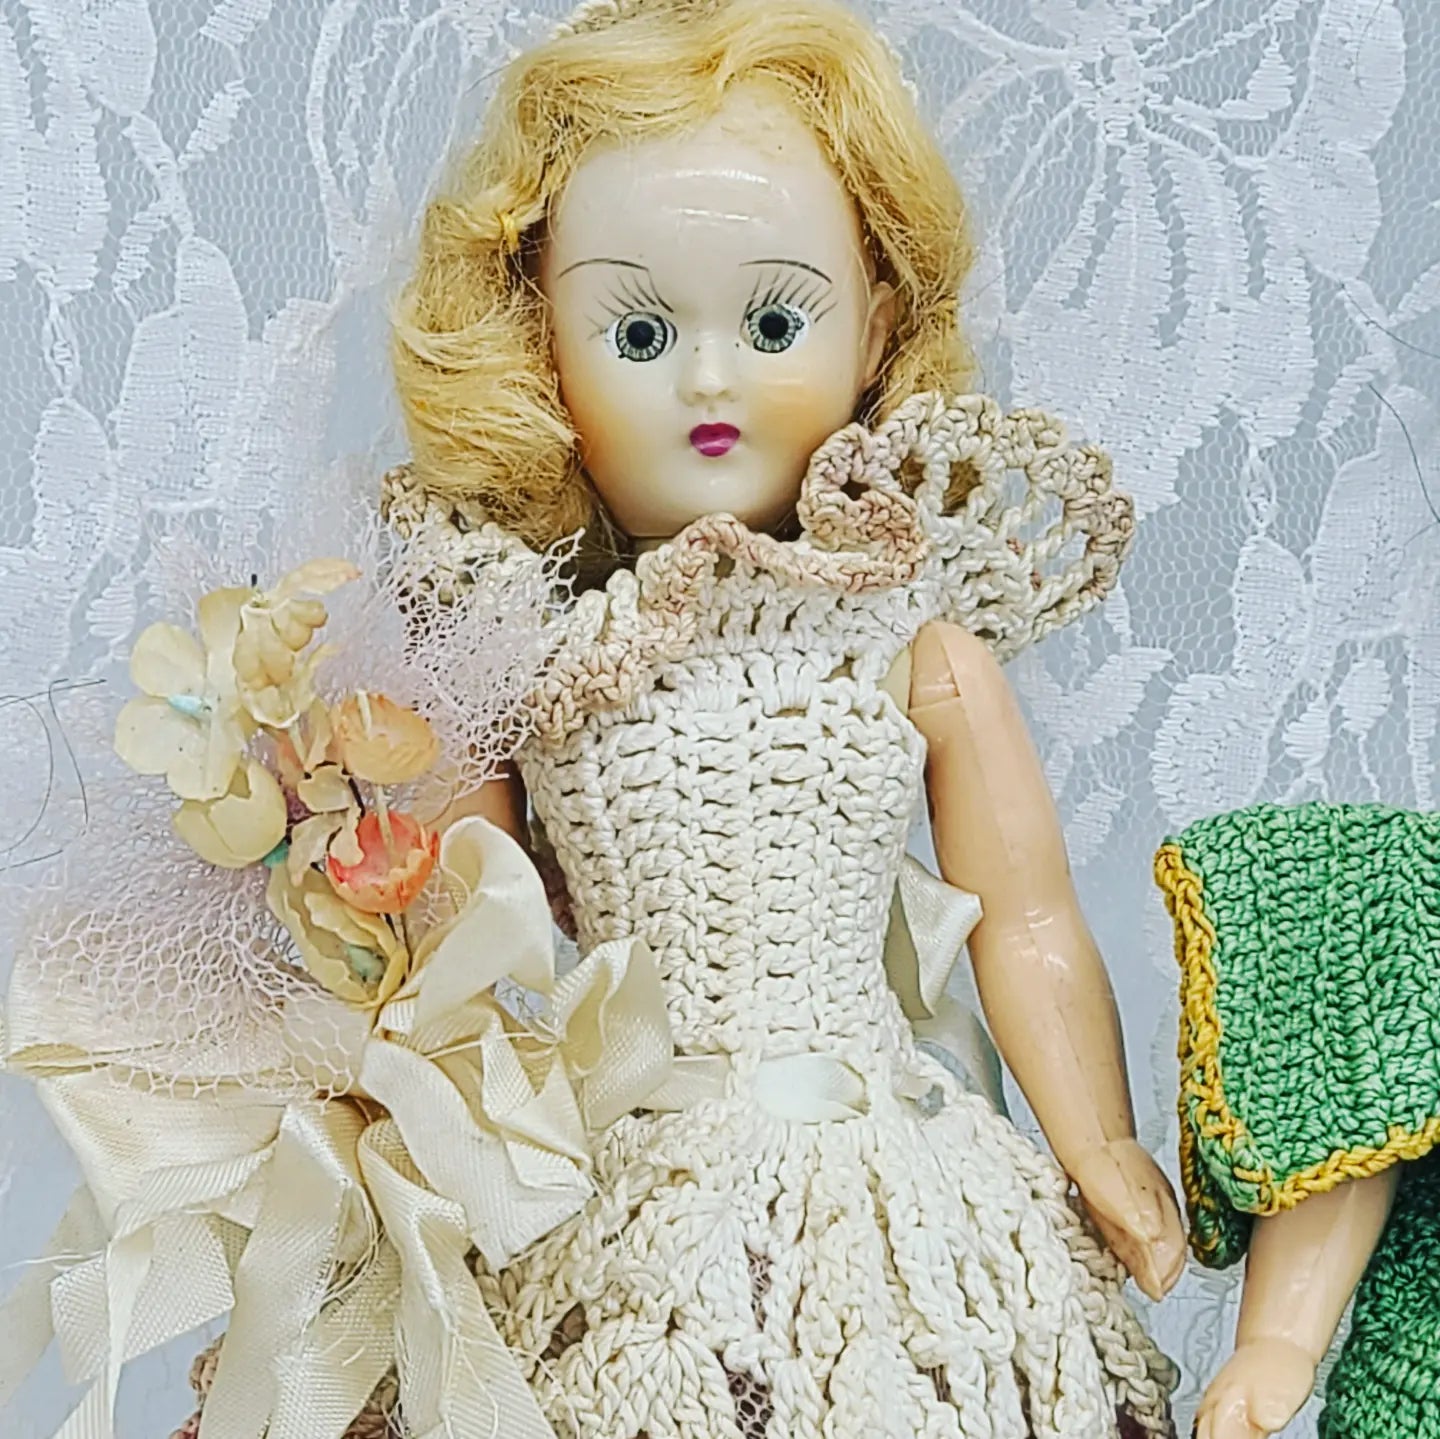 Lot of Three (3) Vintage 1950s Duchess Dolls/ Storybook/Hollywood Dolls 8" Hard Plastic Sleepy Eye Dolls